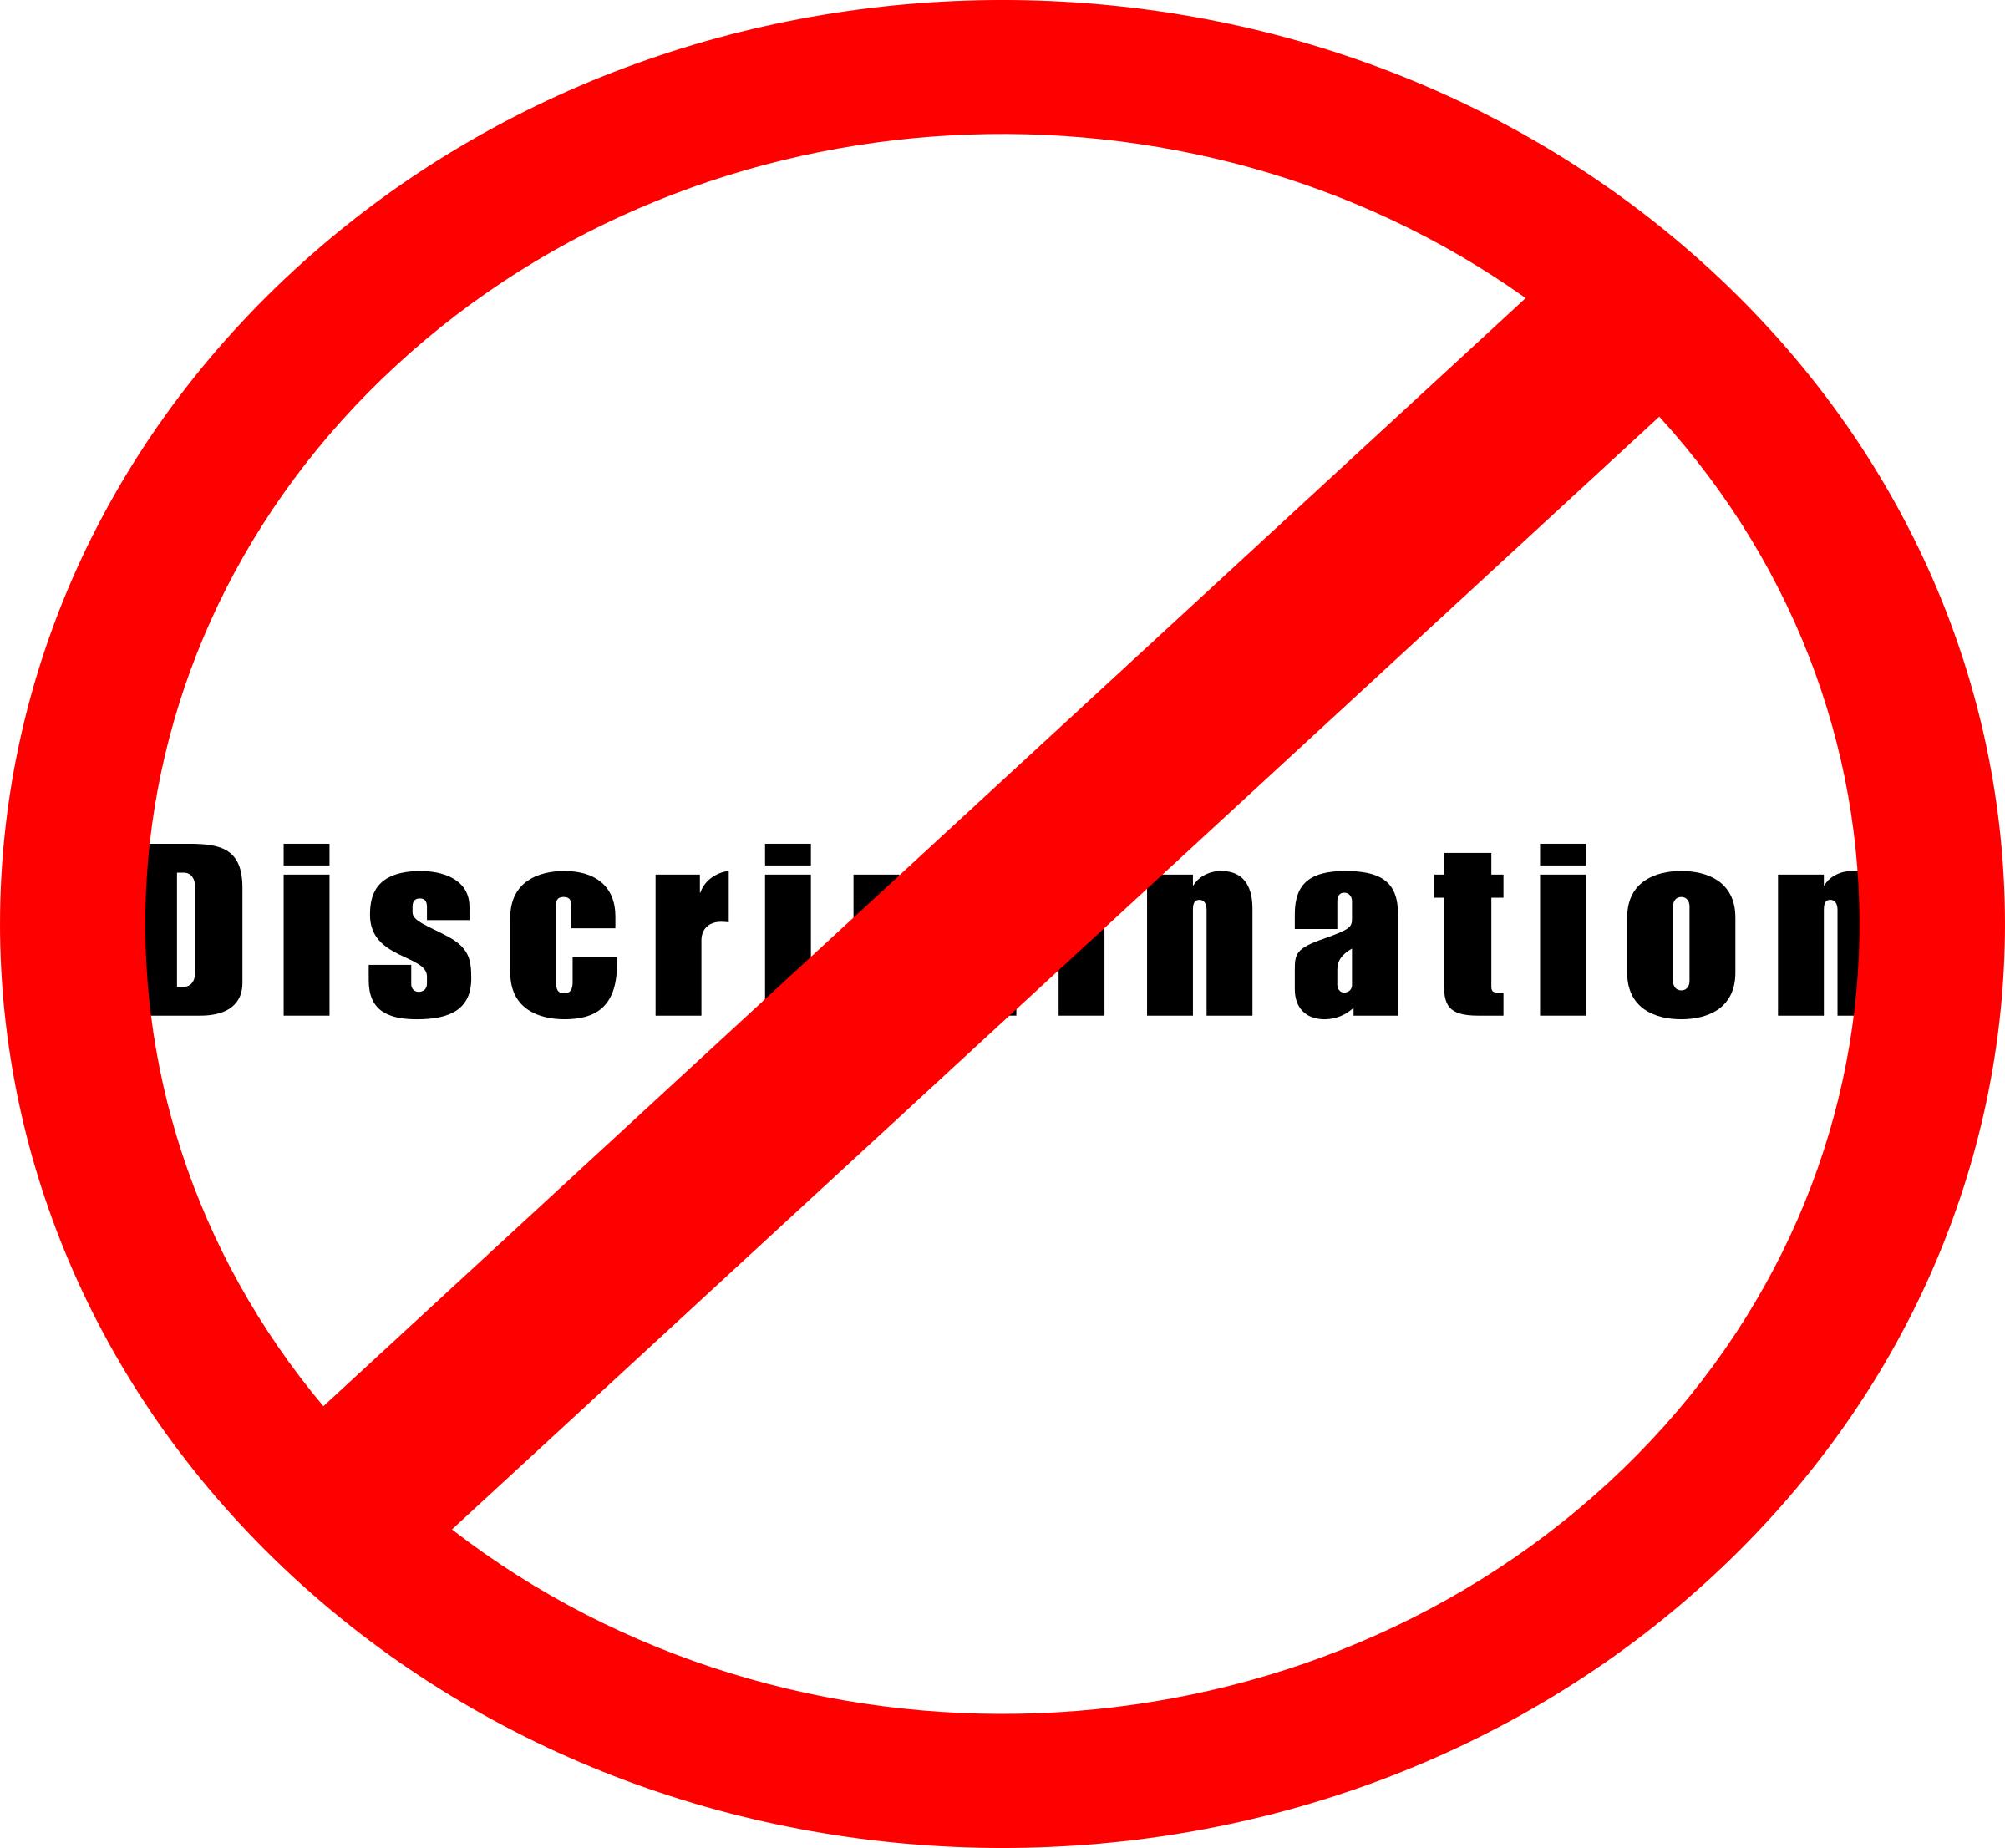 No discrimination sign png